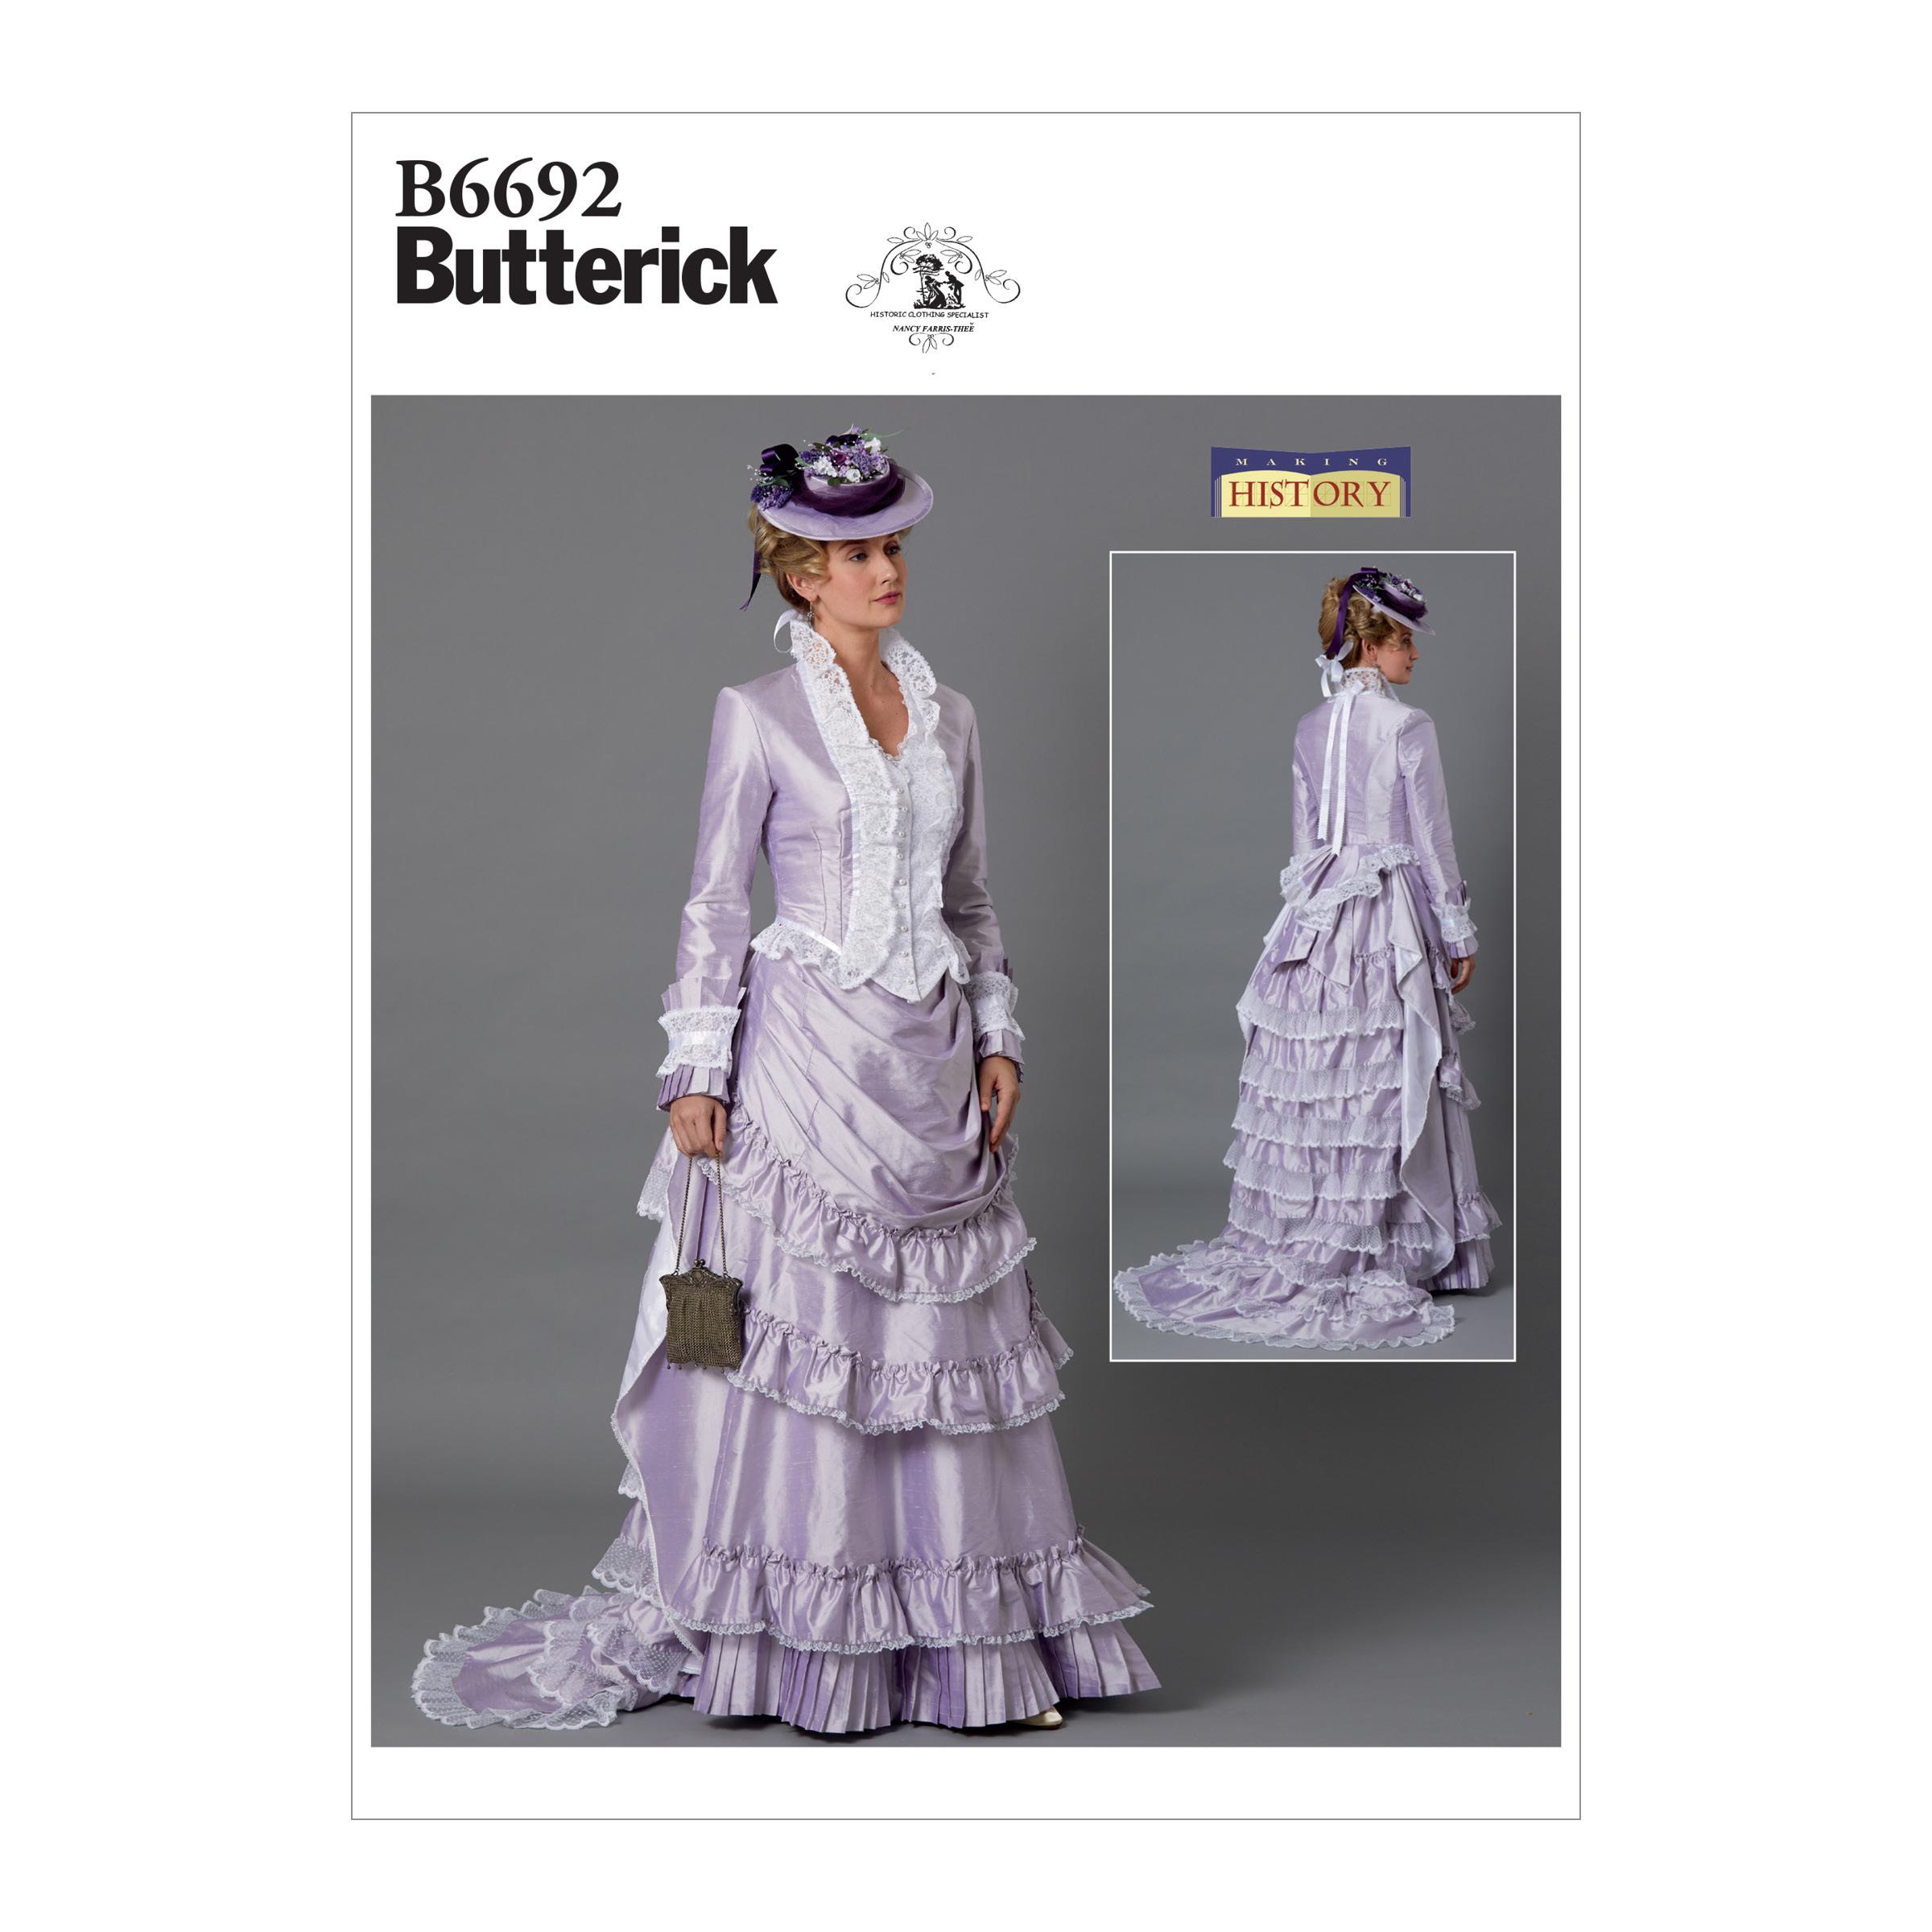 Butterick B6692 Misses' Costume